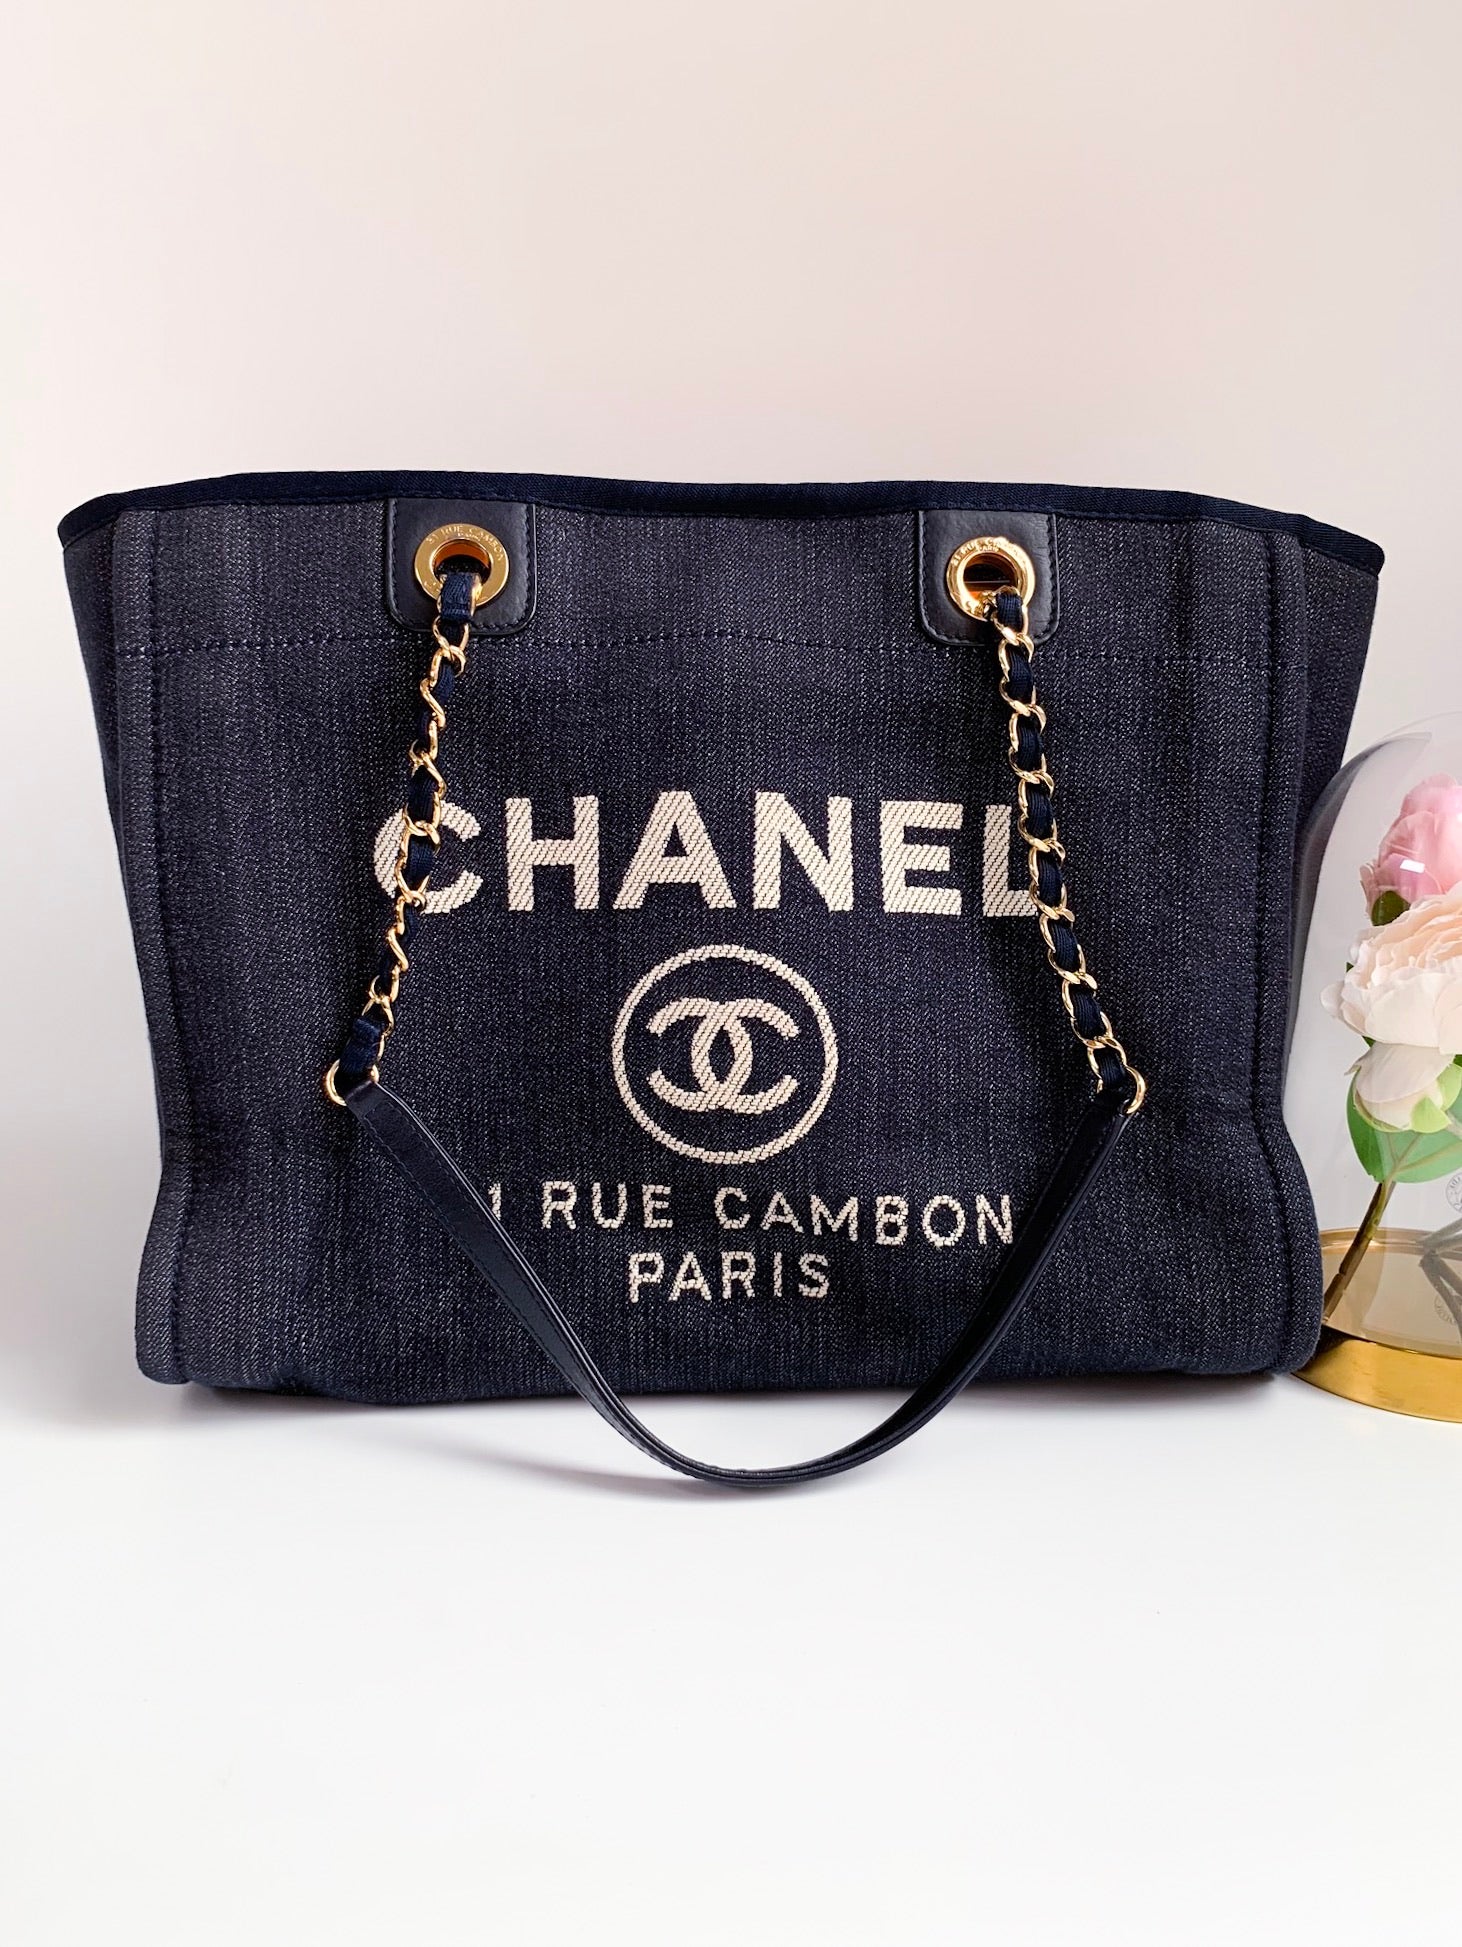 Chanel Blue Denim Deauville Bowling Bag – breezeluxury